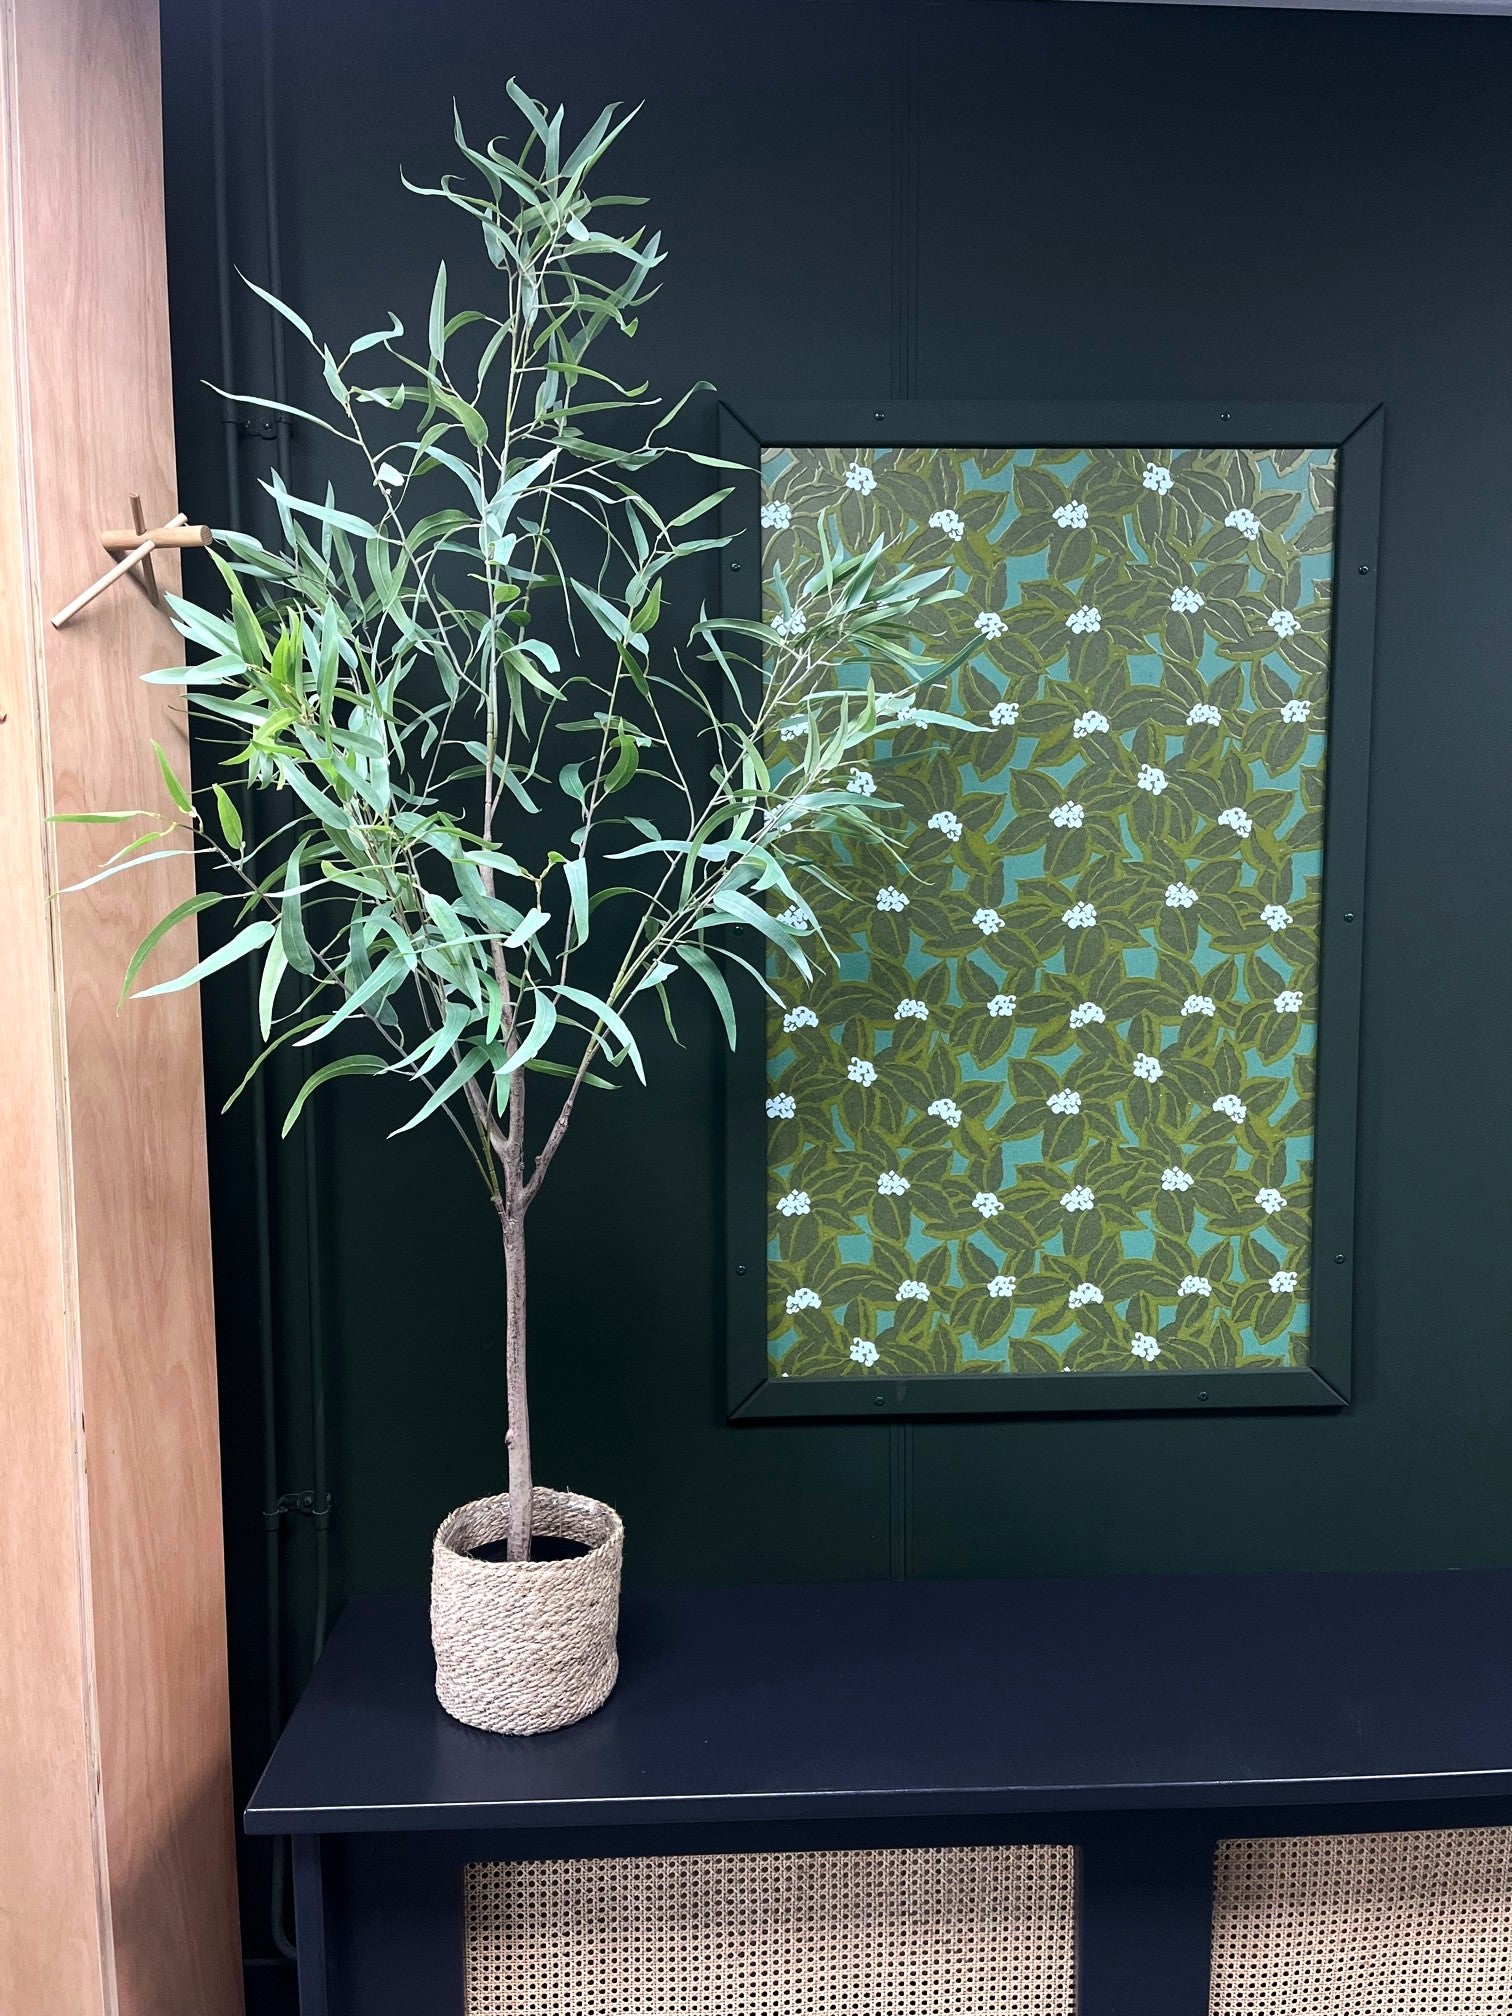 Eucalyptus Kunstplant 2 175cm